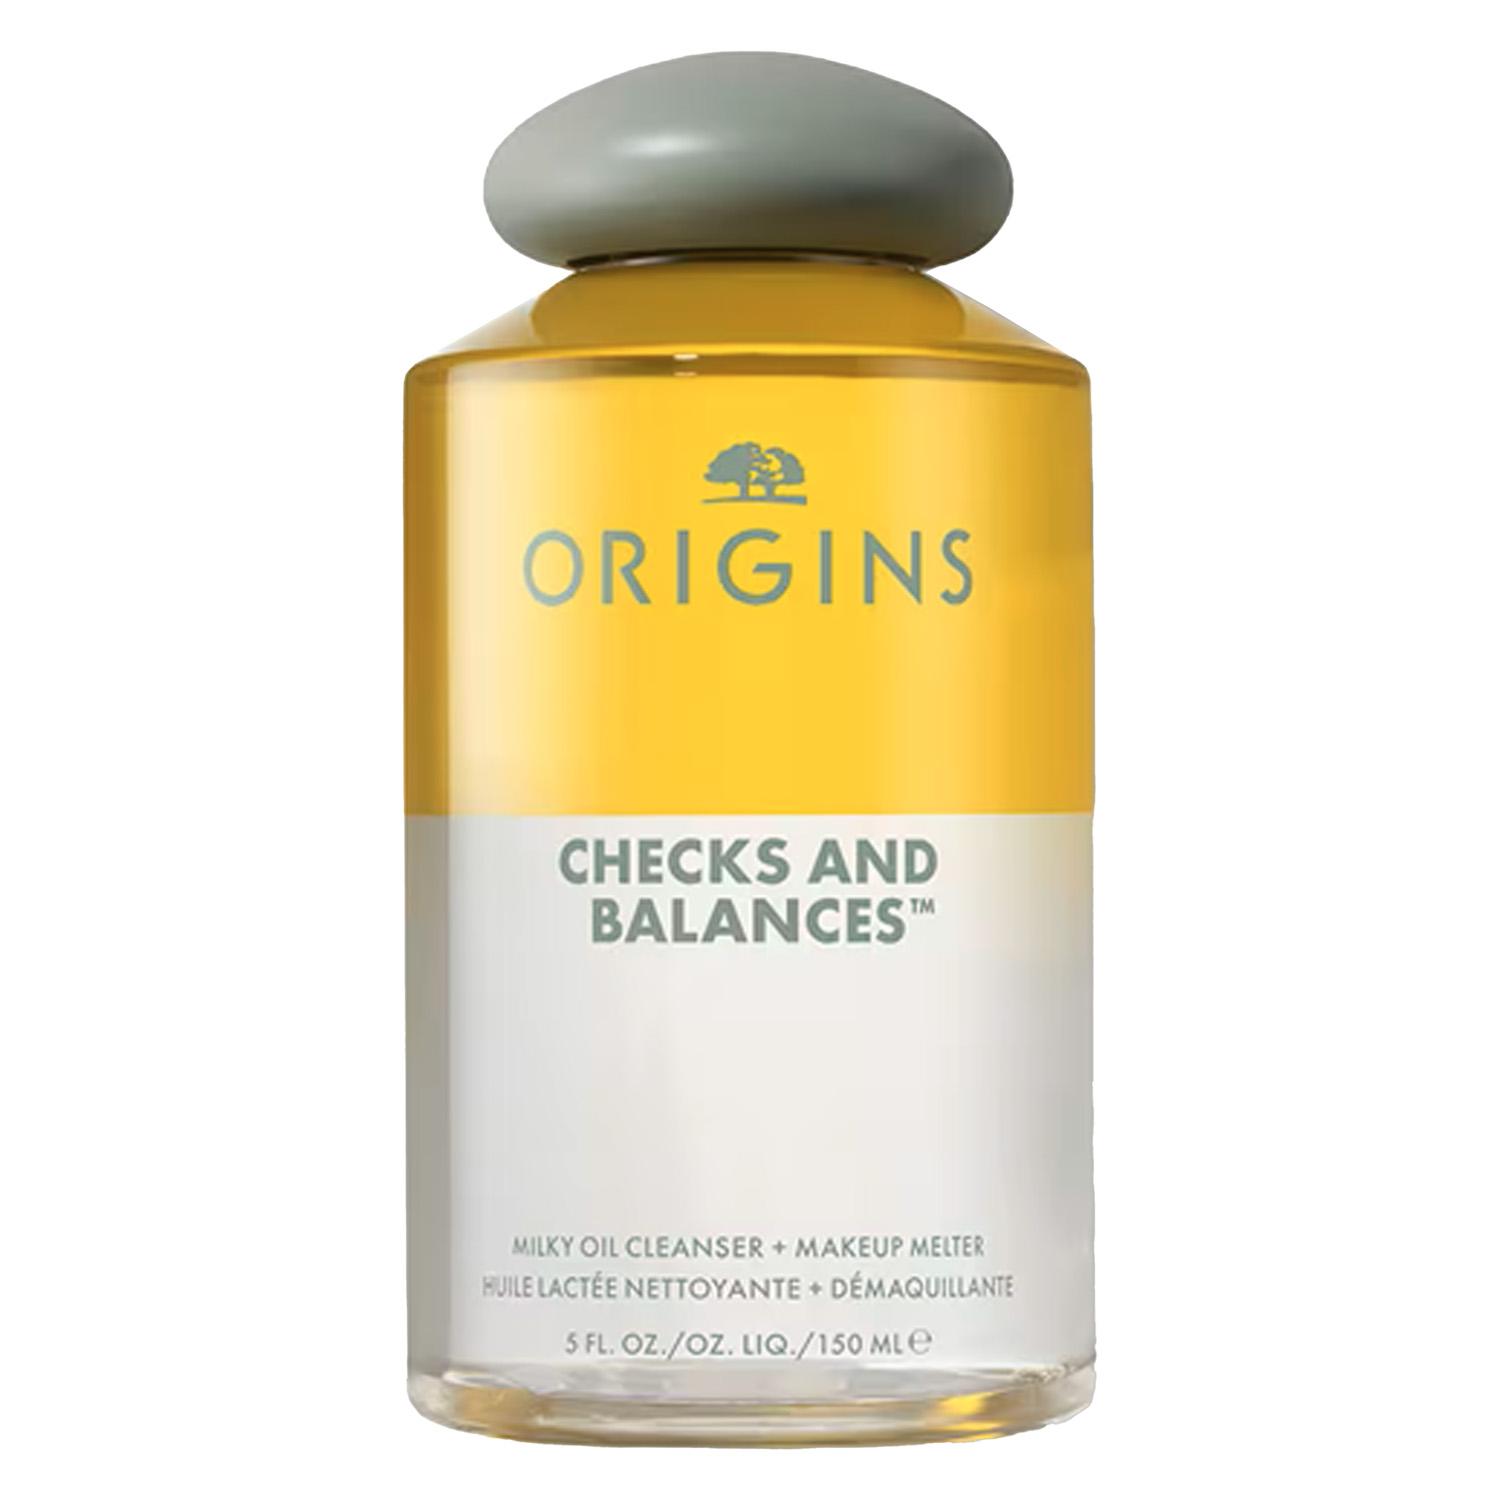 Origins Checks and Balances - Milk Oil Cleanser